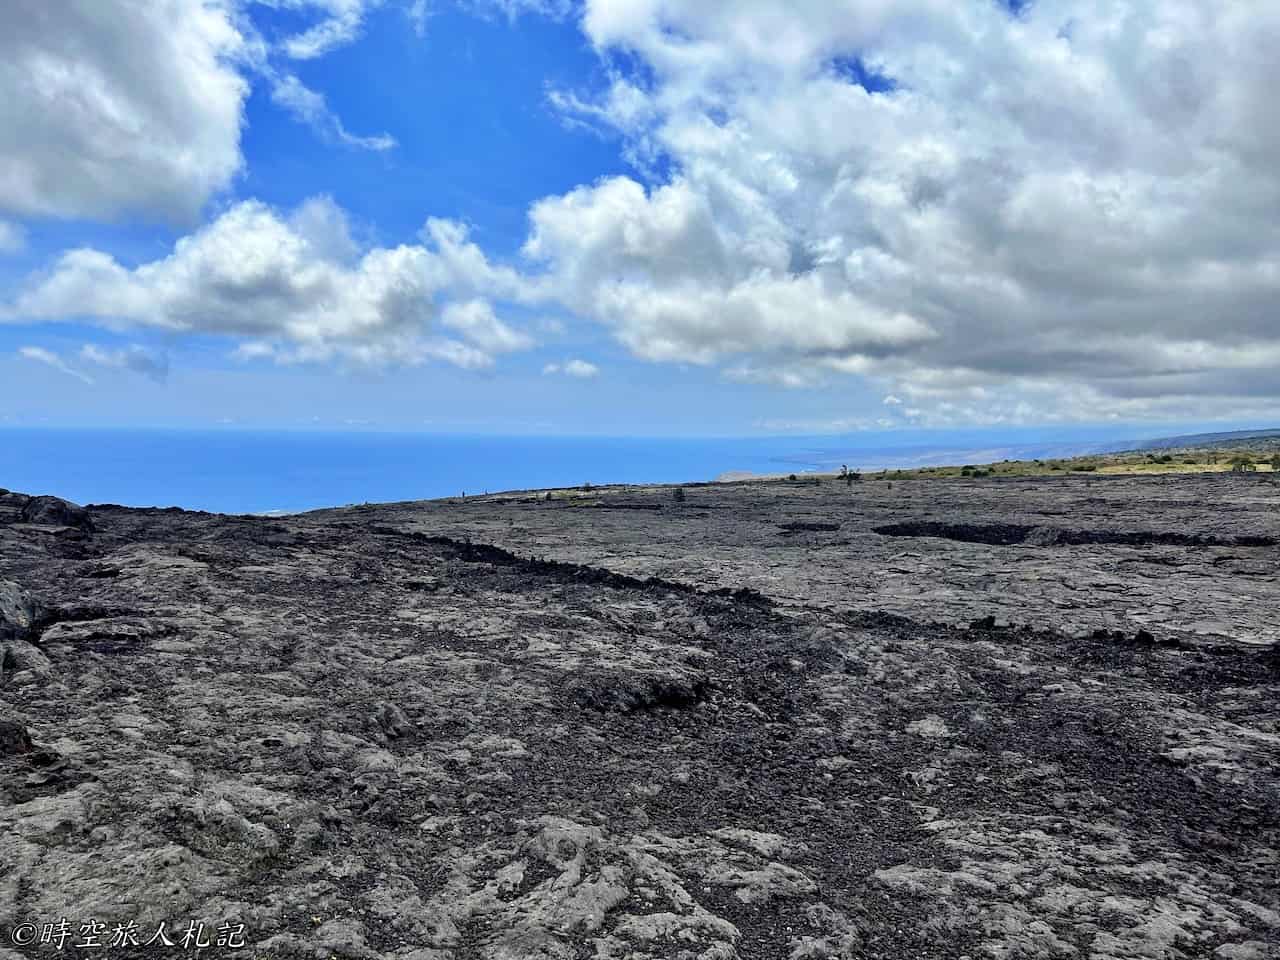 Hawaii volcanos national park 76